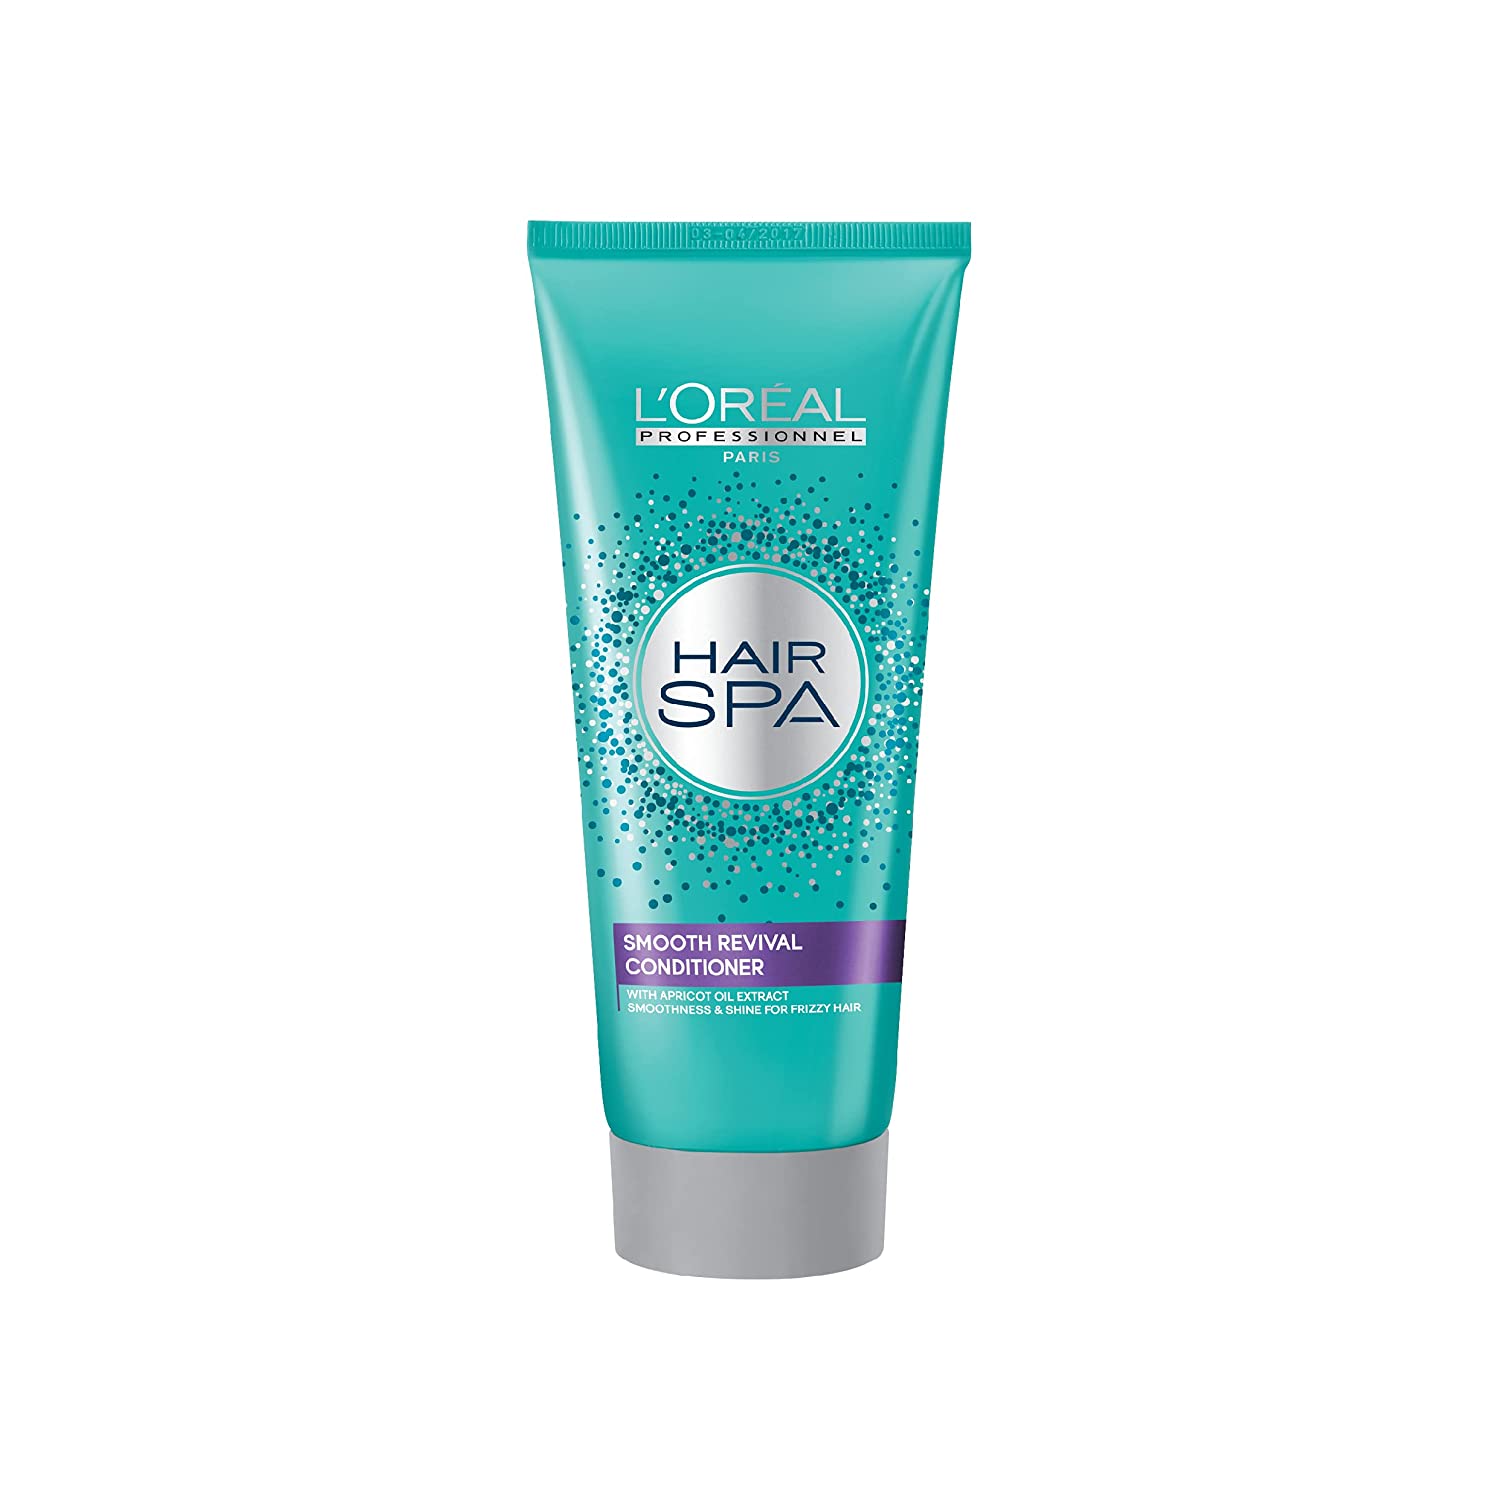 Benefits of L'oreal paris professionals hair spa colour pure shampoo | Pure  shampoo, Hair spa, Spa colors